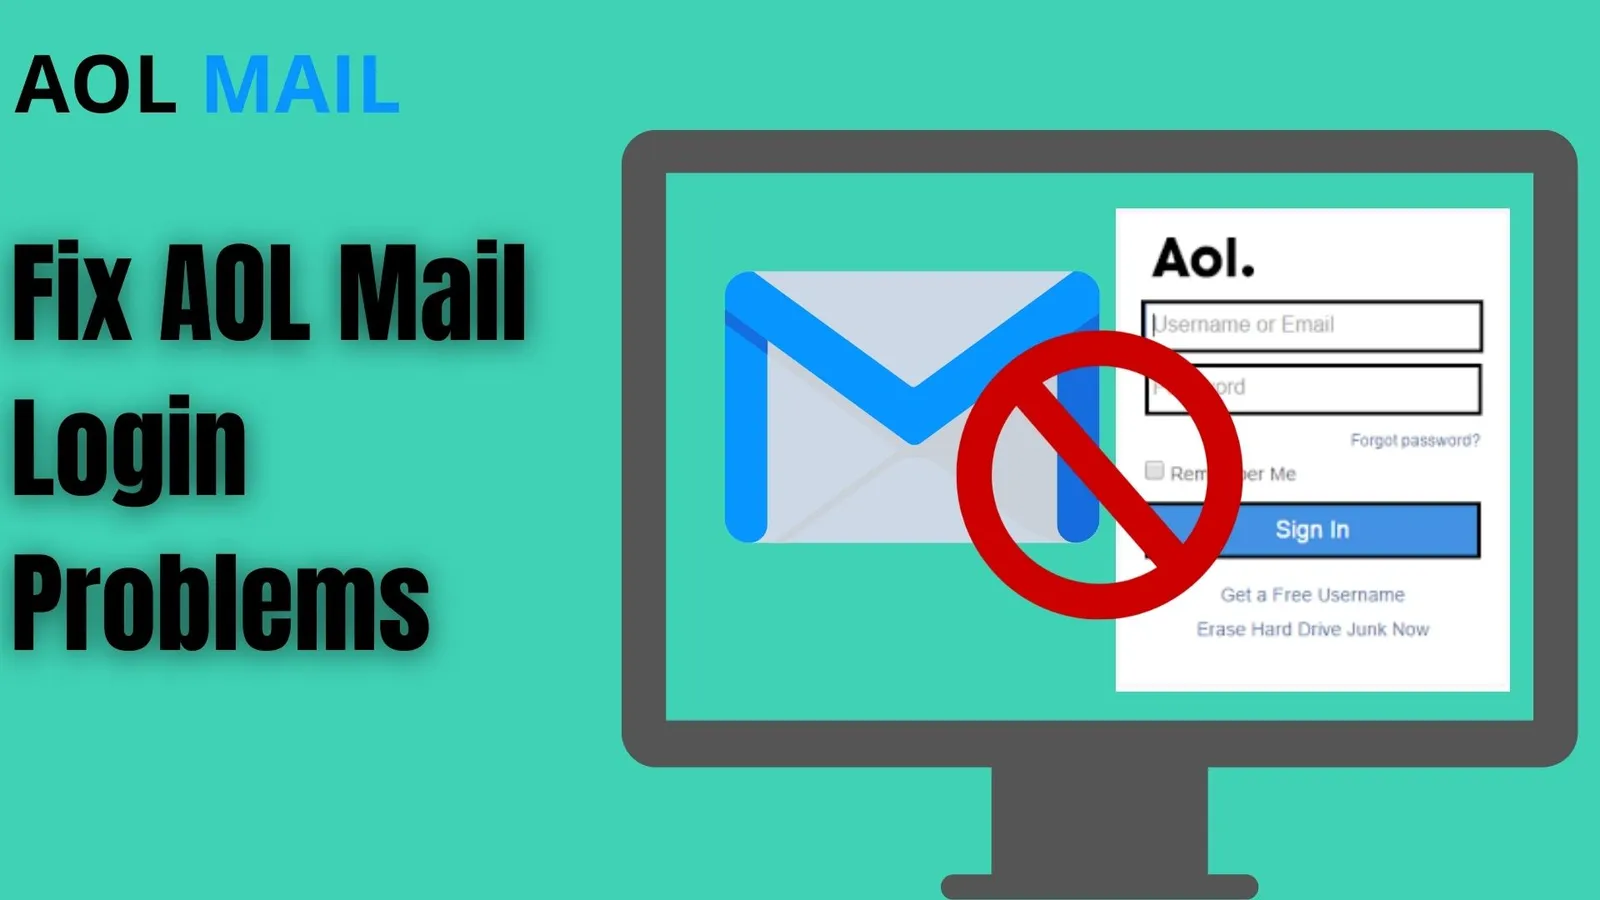 Does AOL Mail still work?